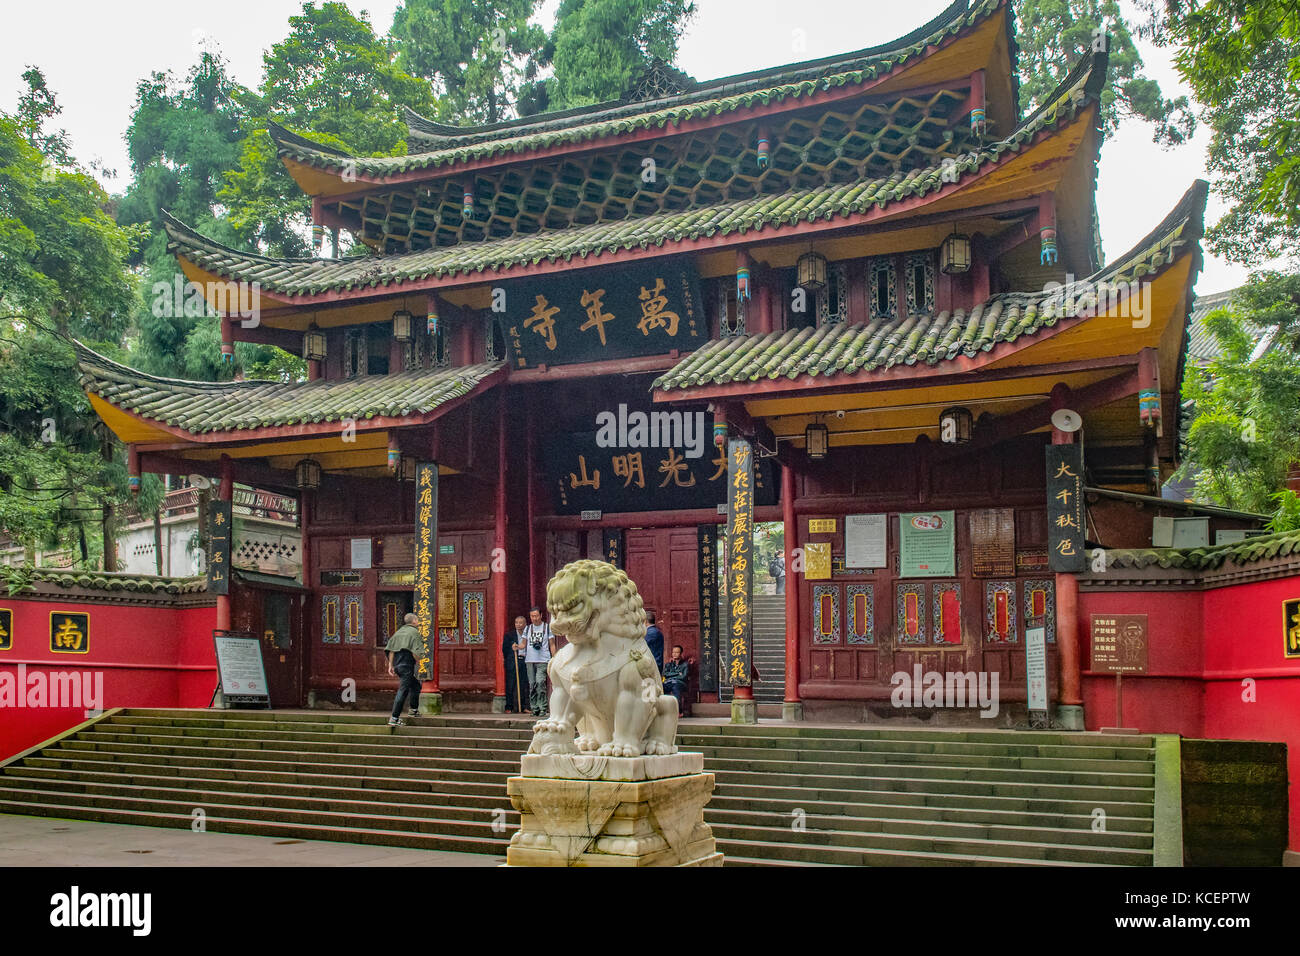 Entrance to Wannian Temple, Mount Emei, Sichuan, China Stock Photo